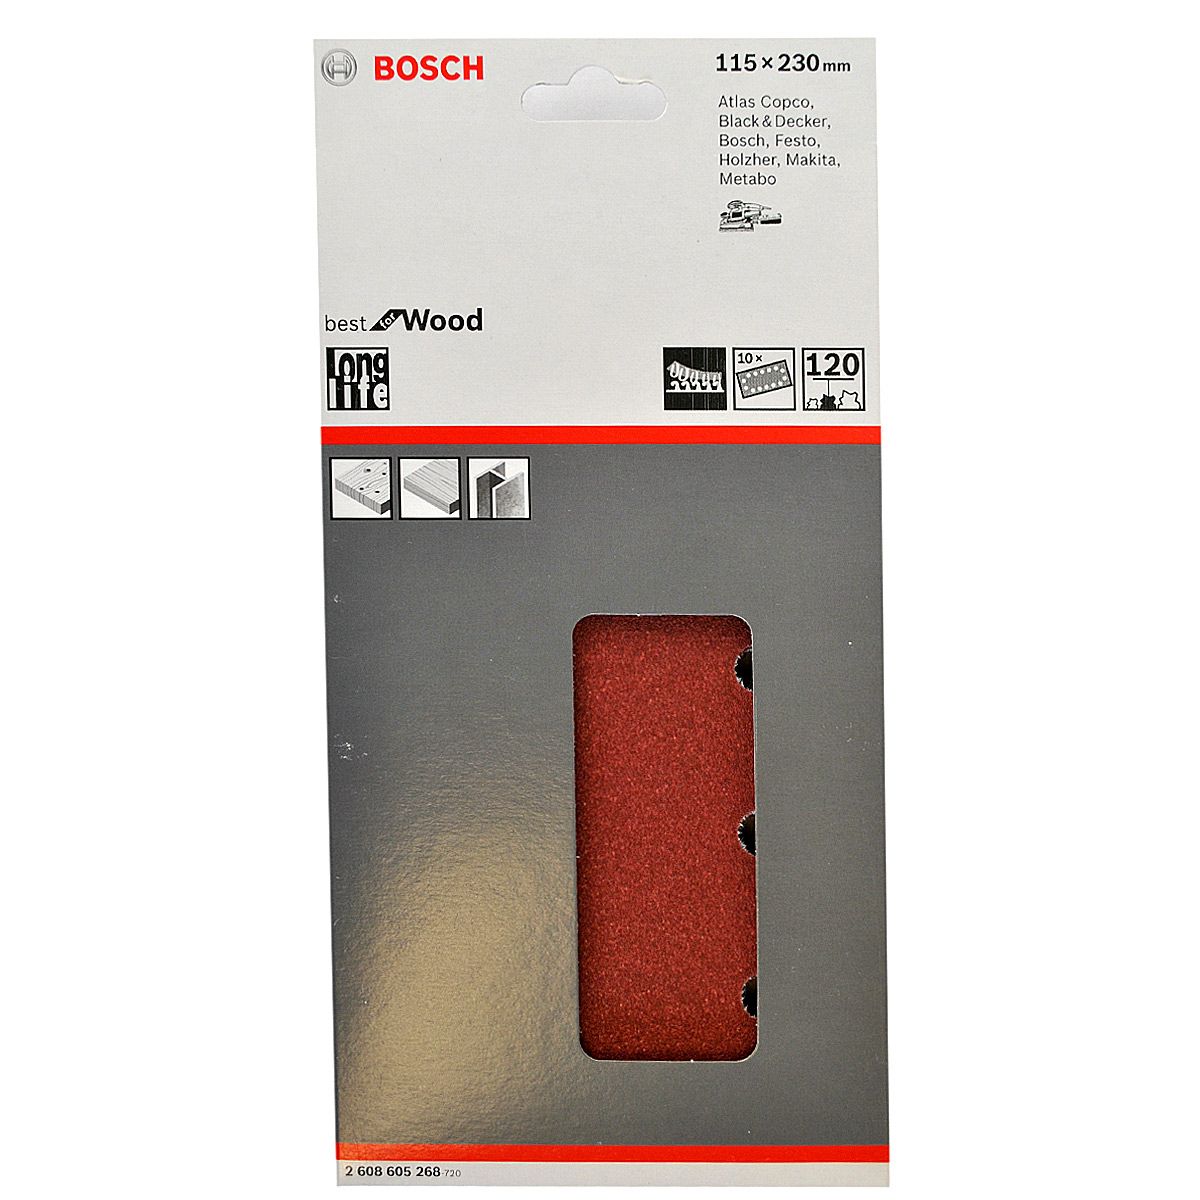 120g 60g Pack of 10 80g Bosch Sanding Sheets 115 x 230mm FREE P&P 'BS22 